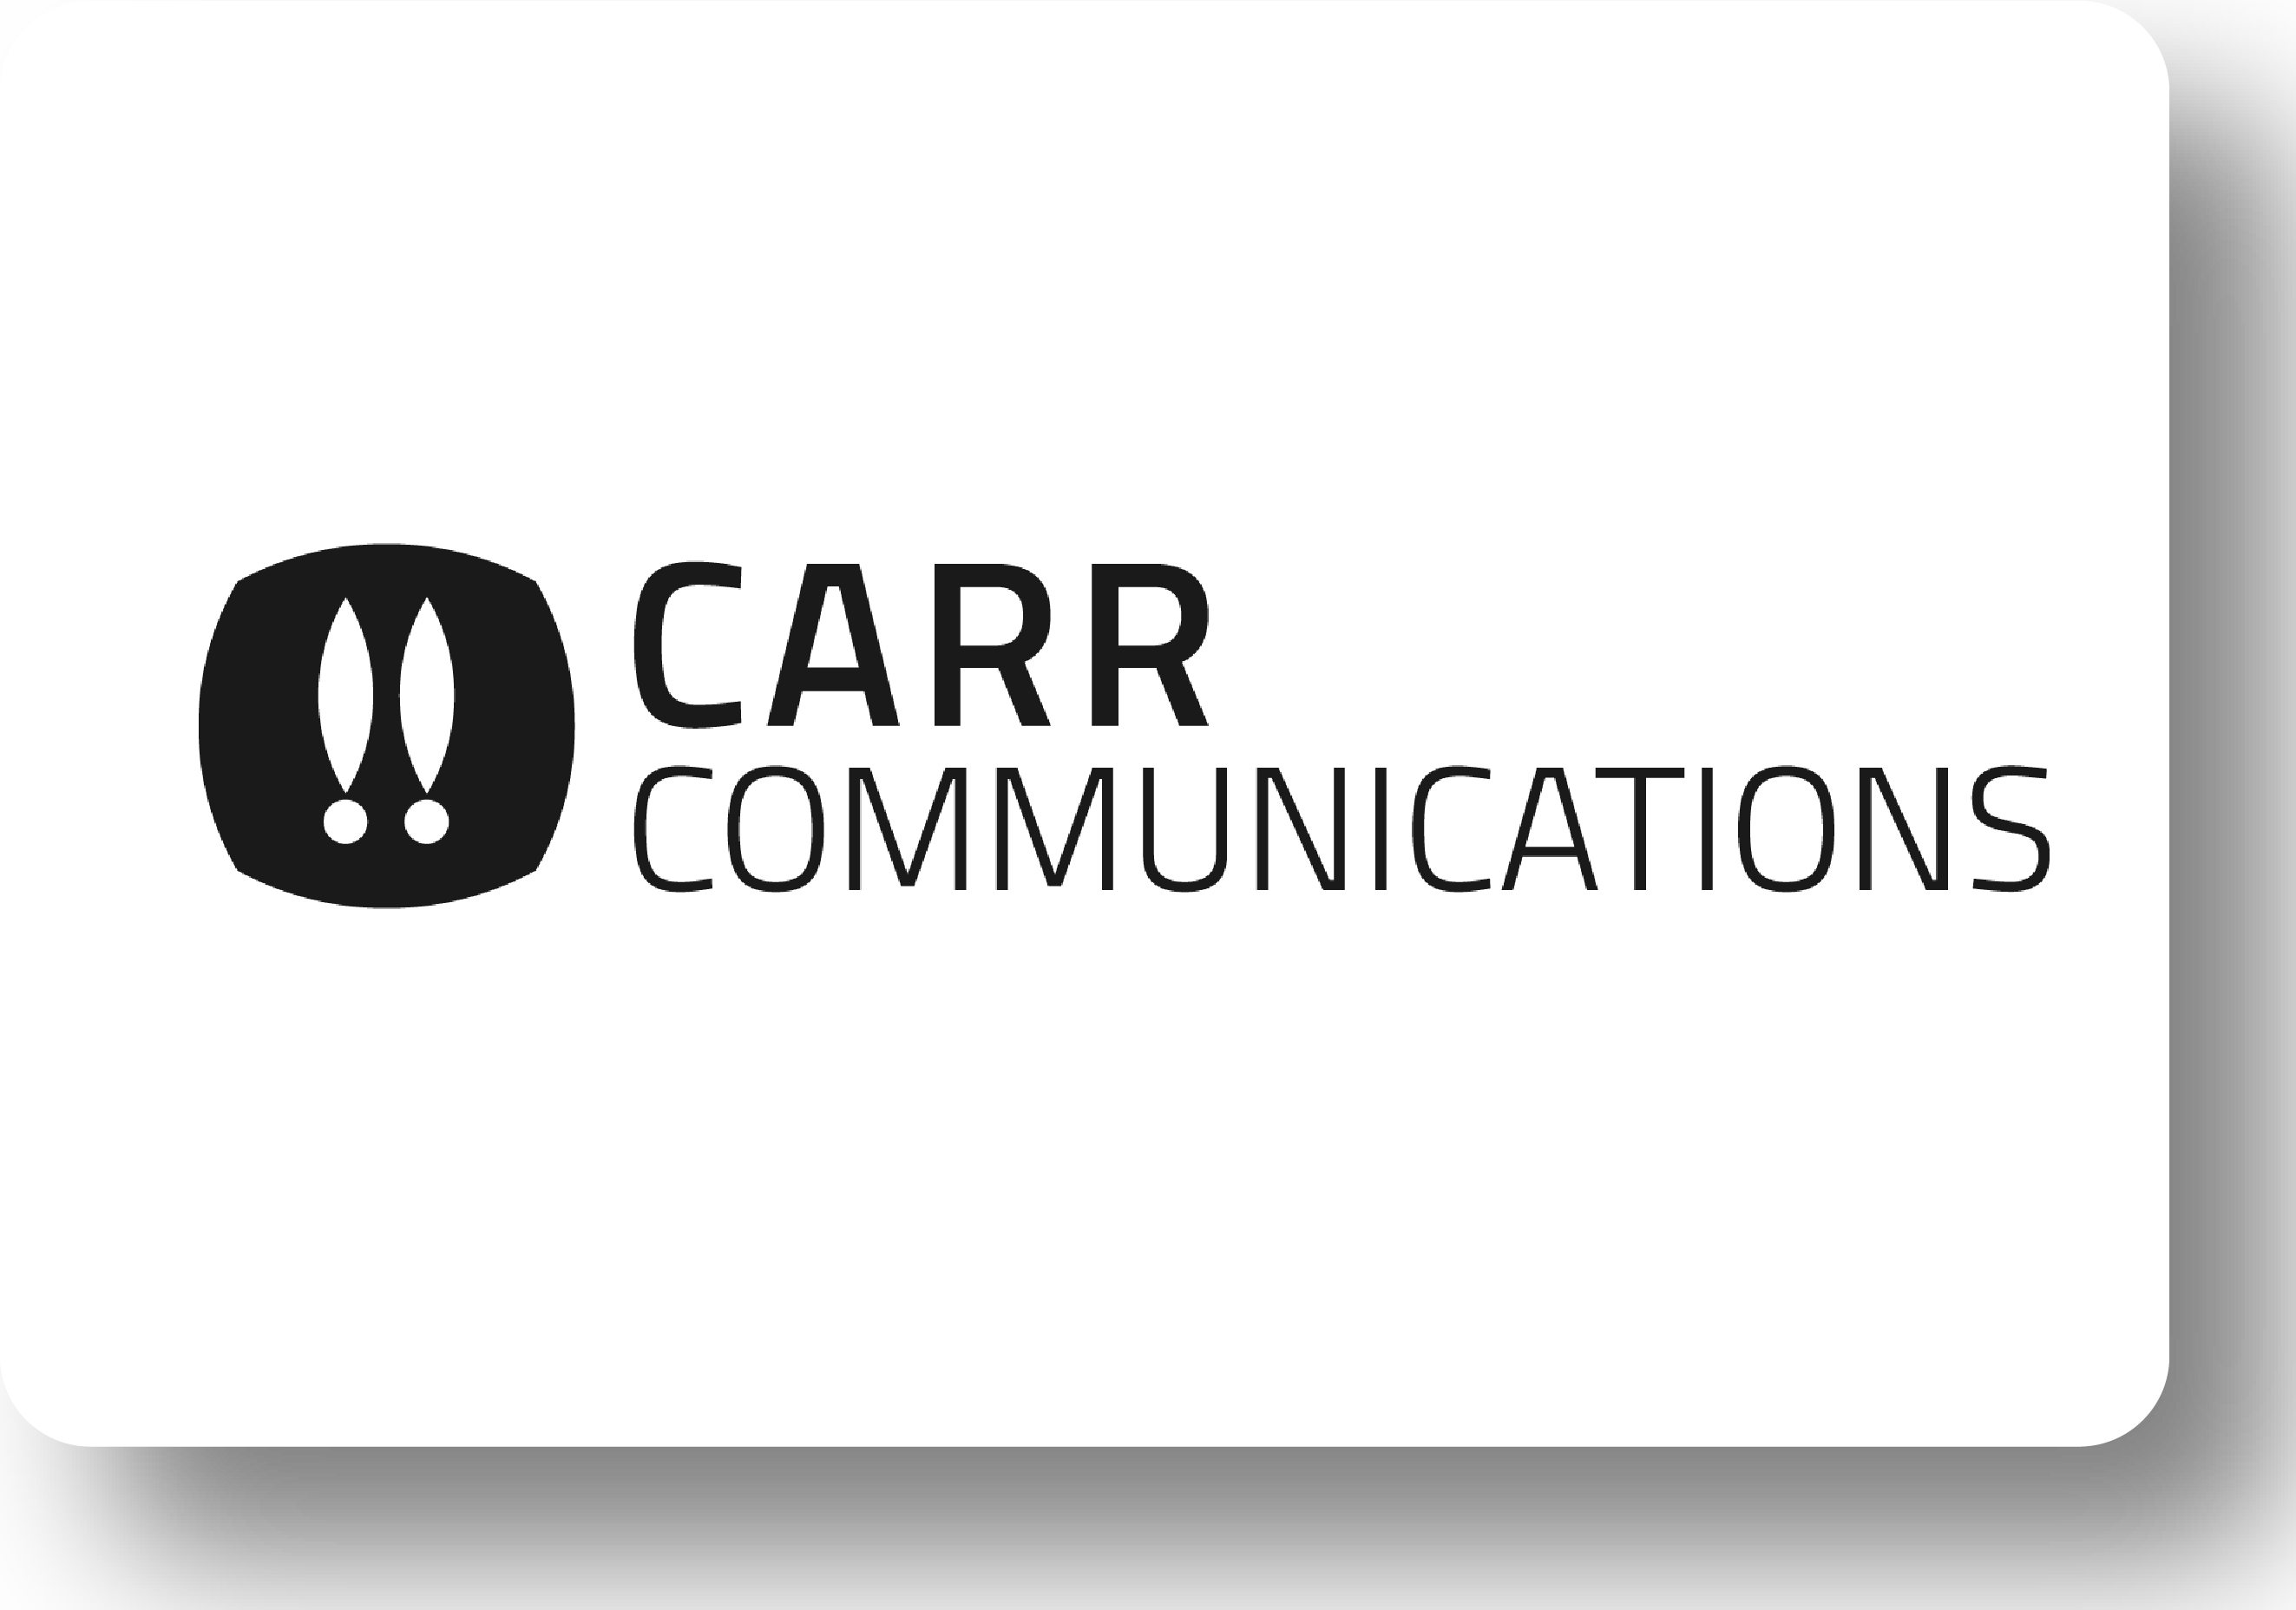 Carr Communications Logo